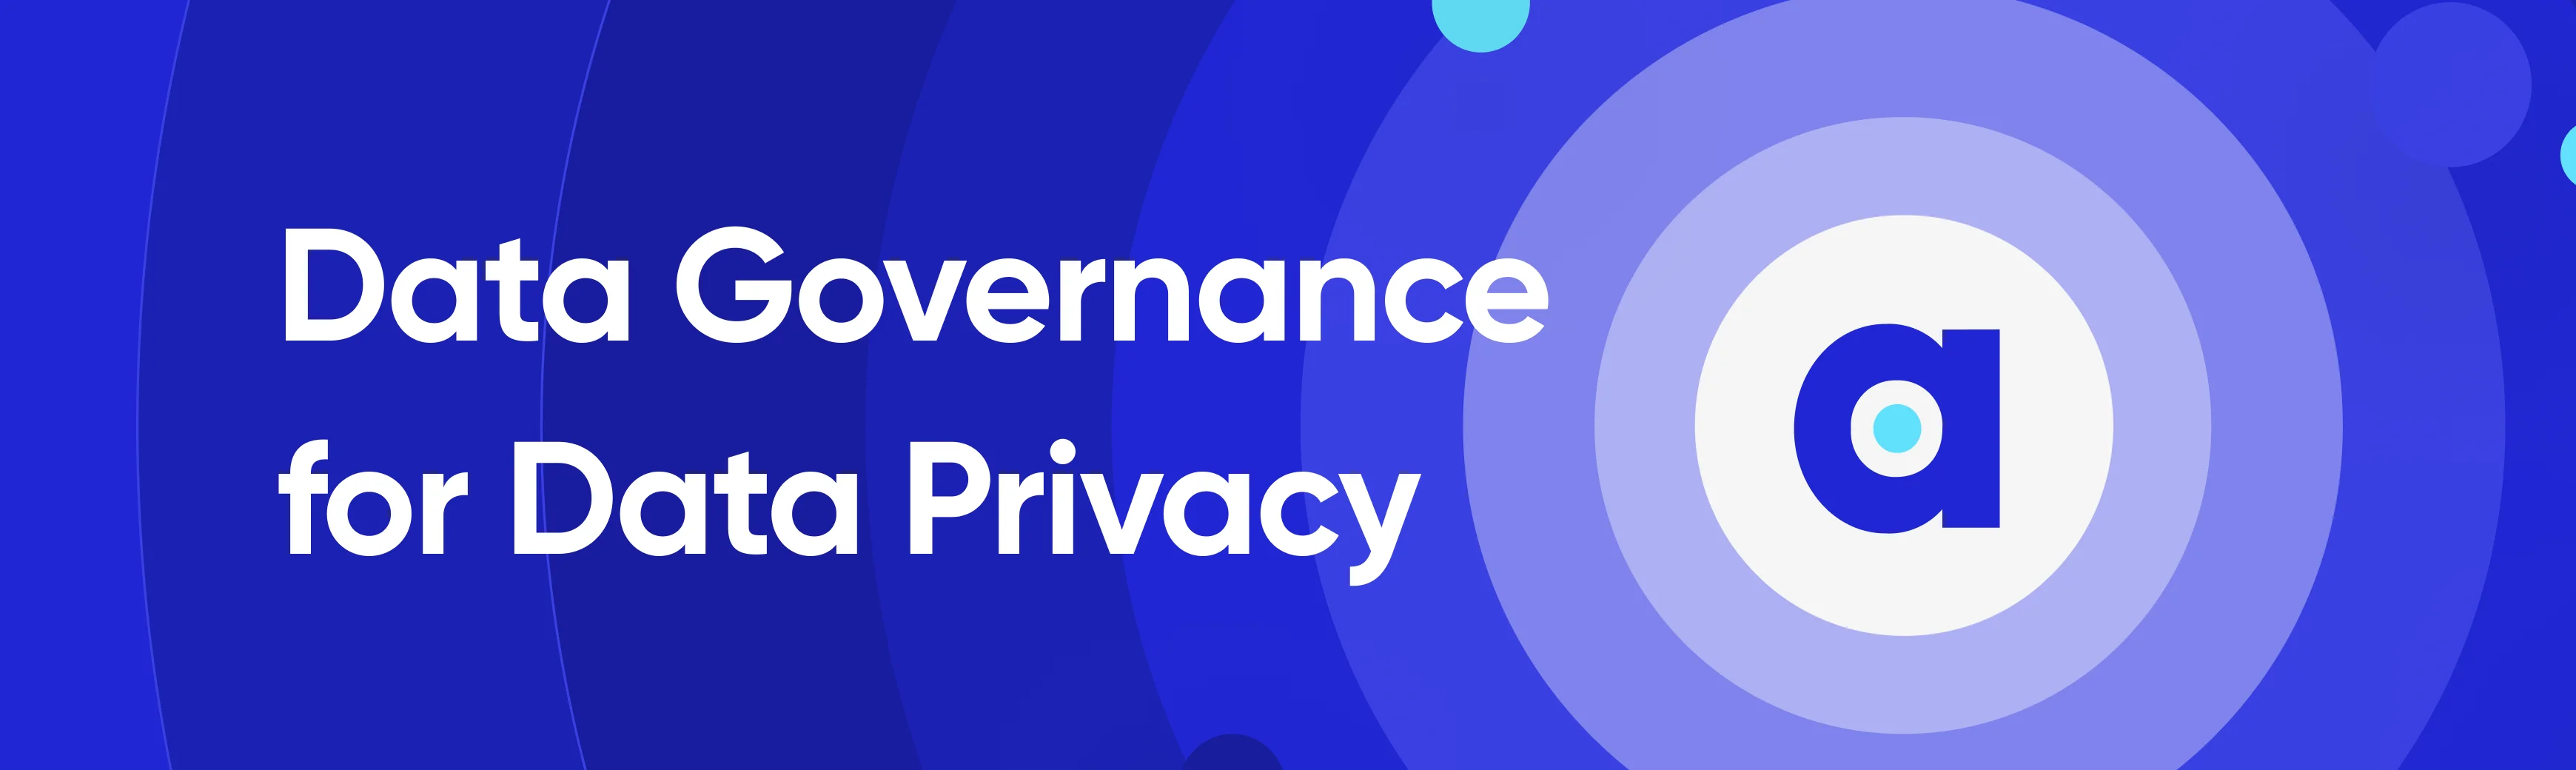 Data Governance for Data Privacy